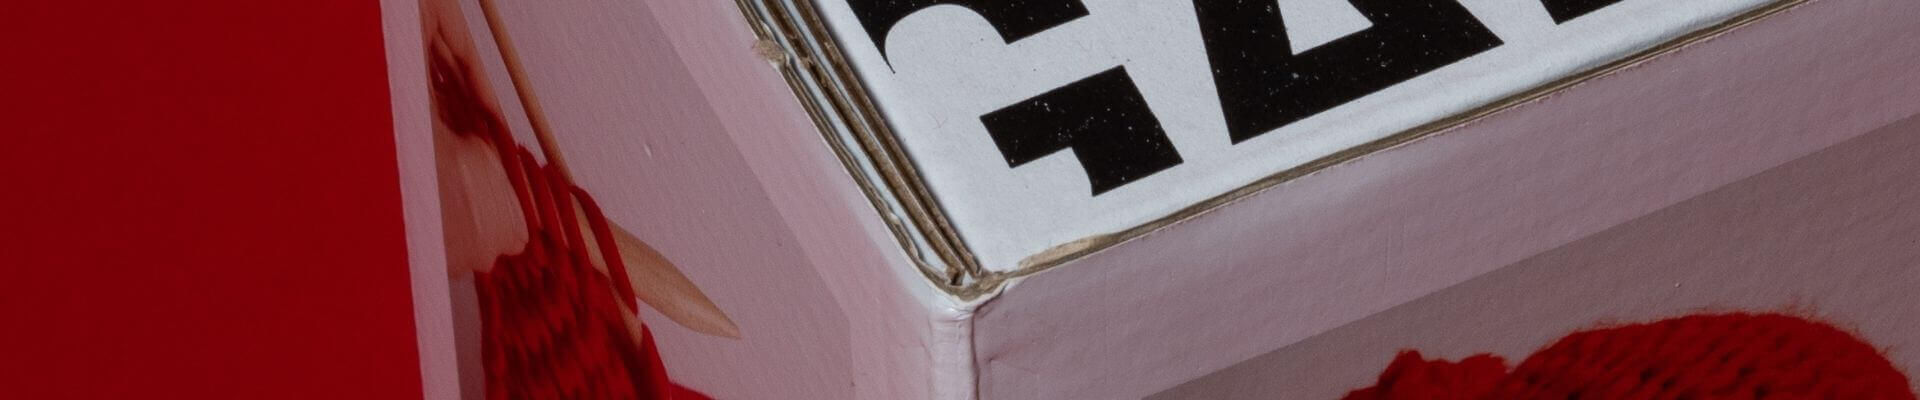 Personalisation - Material - Corrugated Cardboard